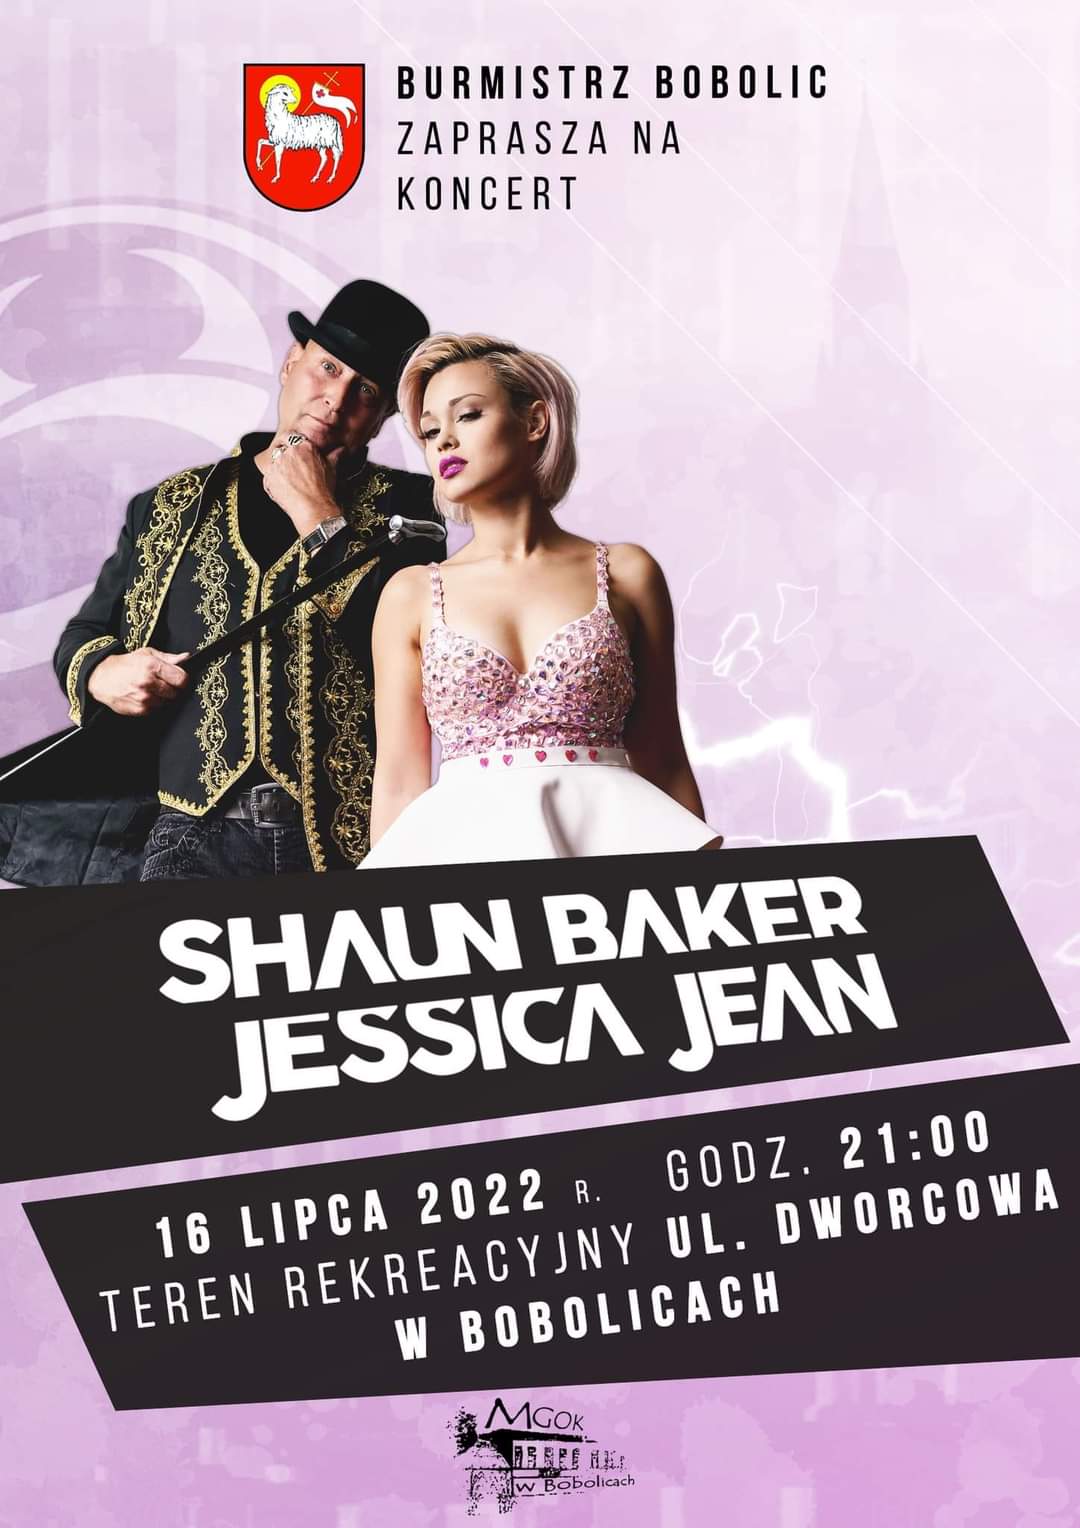 Burmistrz Bobolic zaprasza na koncert Shaun Baker Jessica Jean w dniu 16 lipca 2022